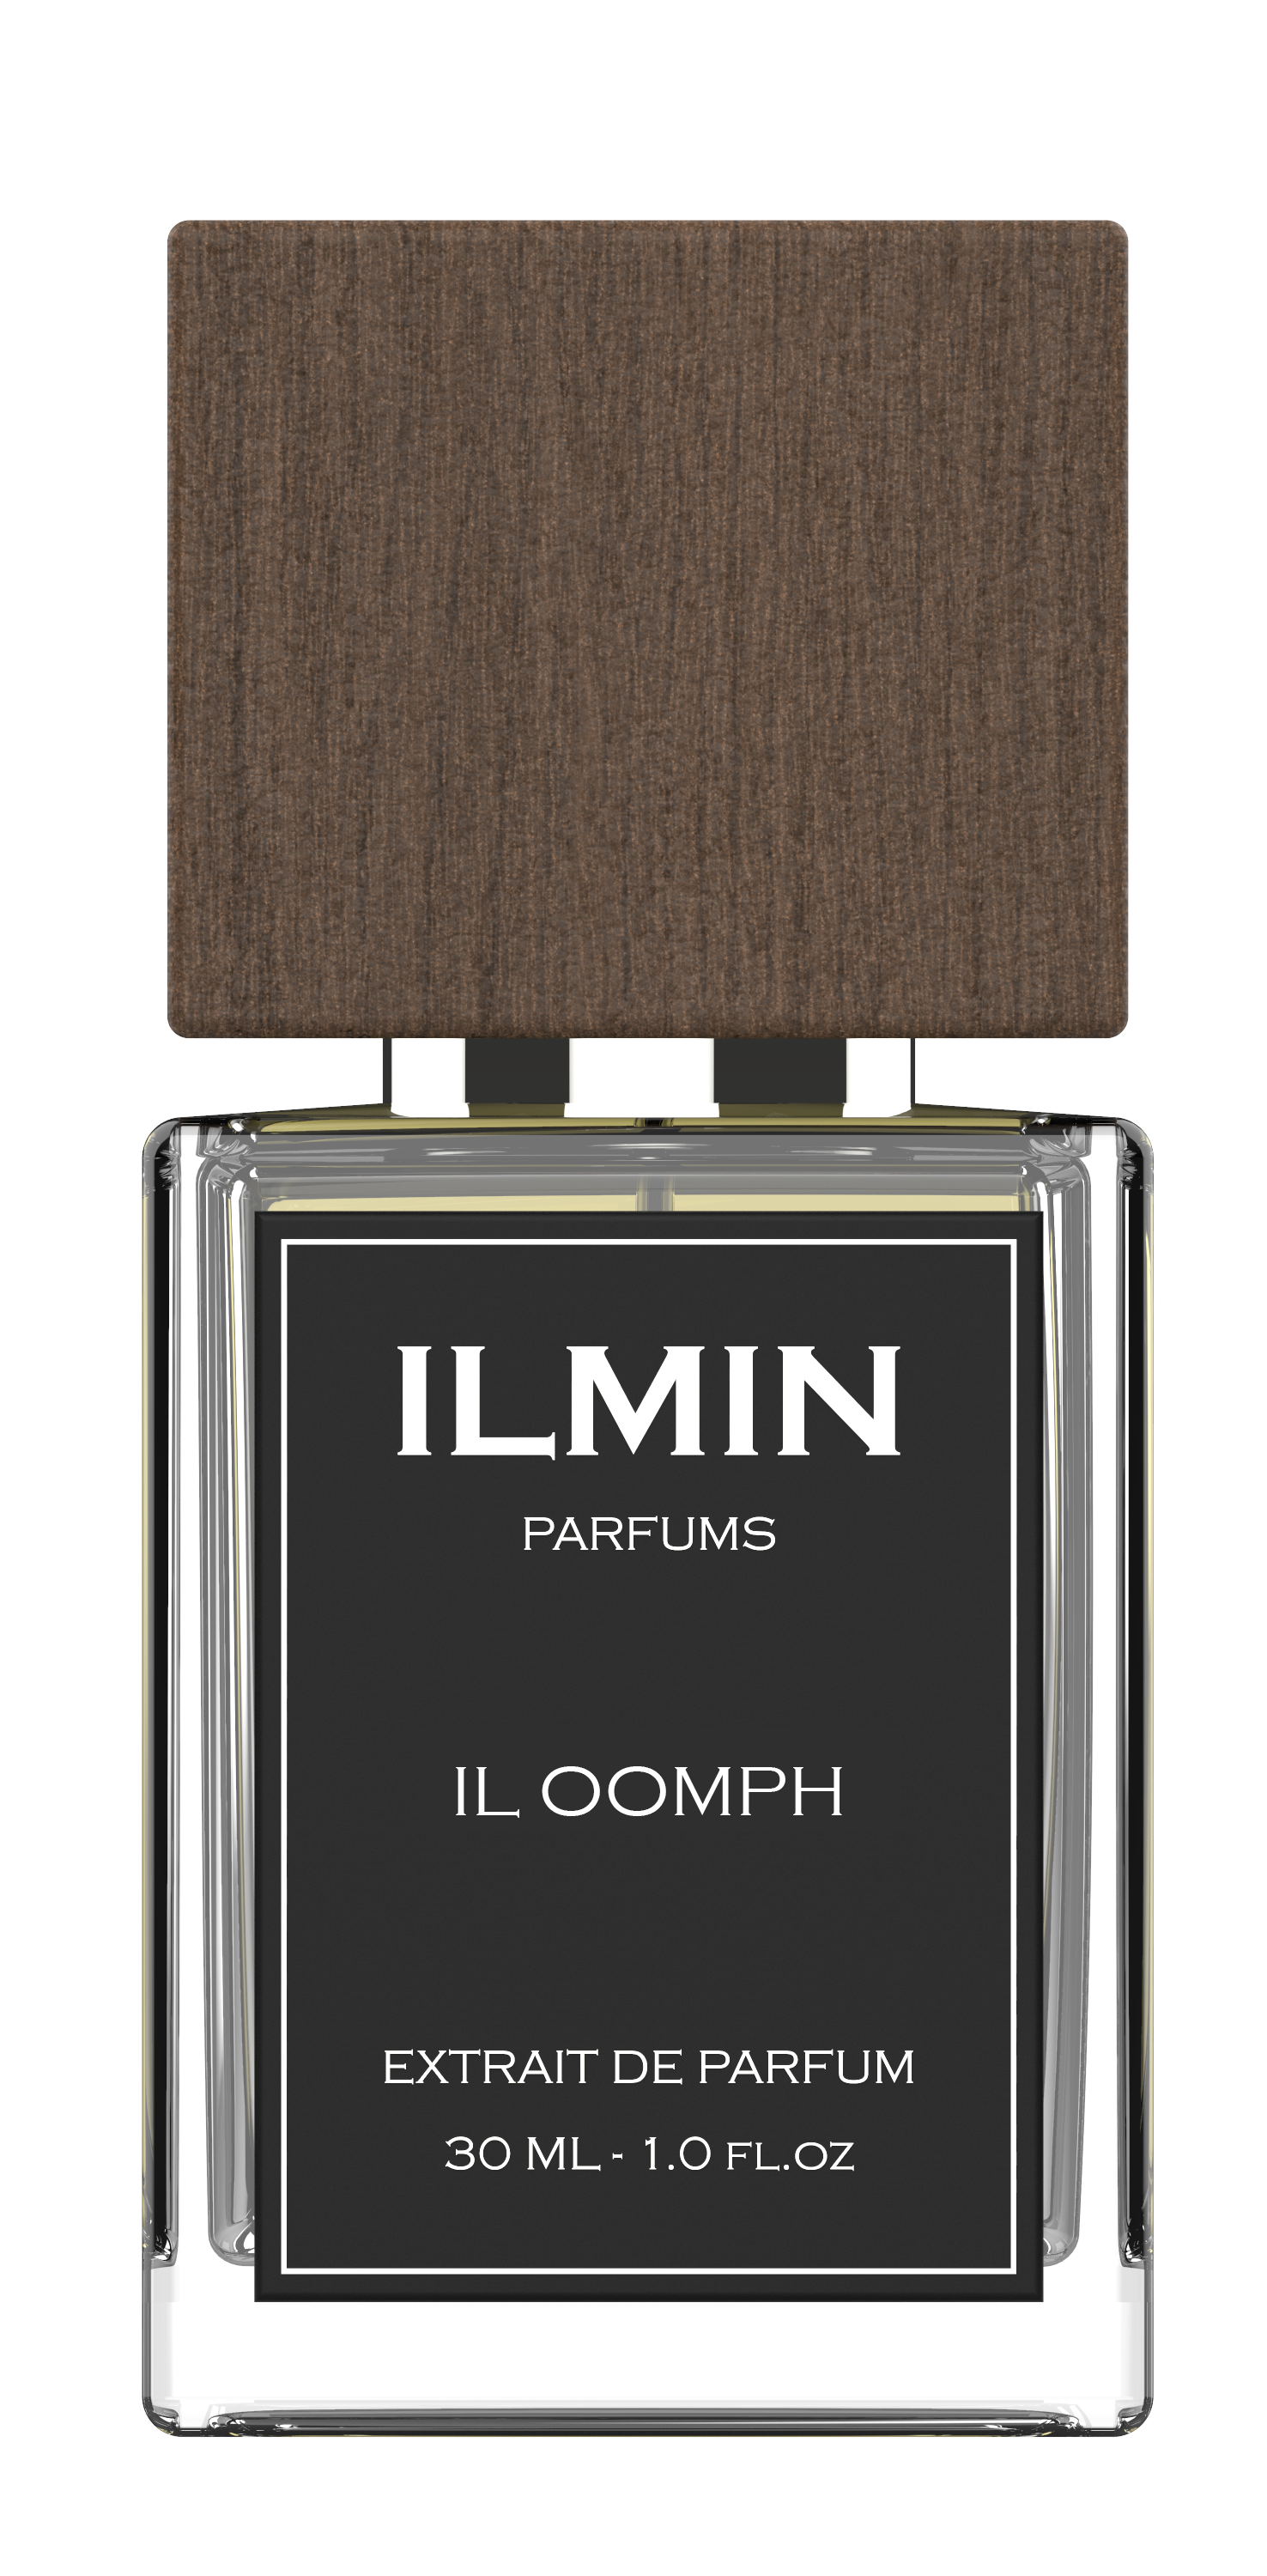 ILMIN Parfums Parfum Extrait De OOMPH 1oz / 30ml – USA Spray IL OFFICIAL ILMIN